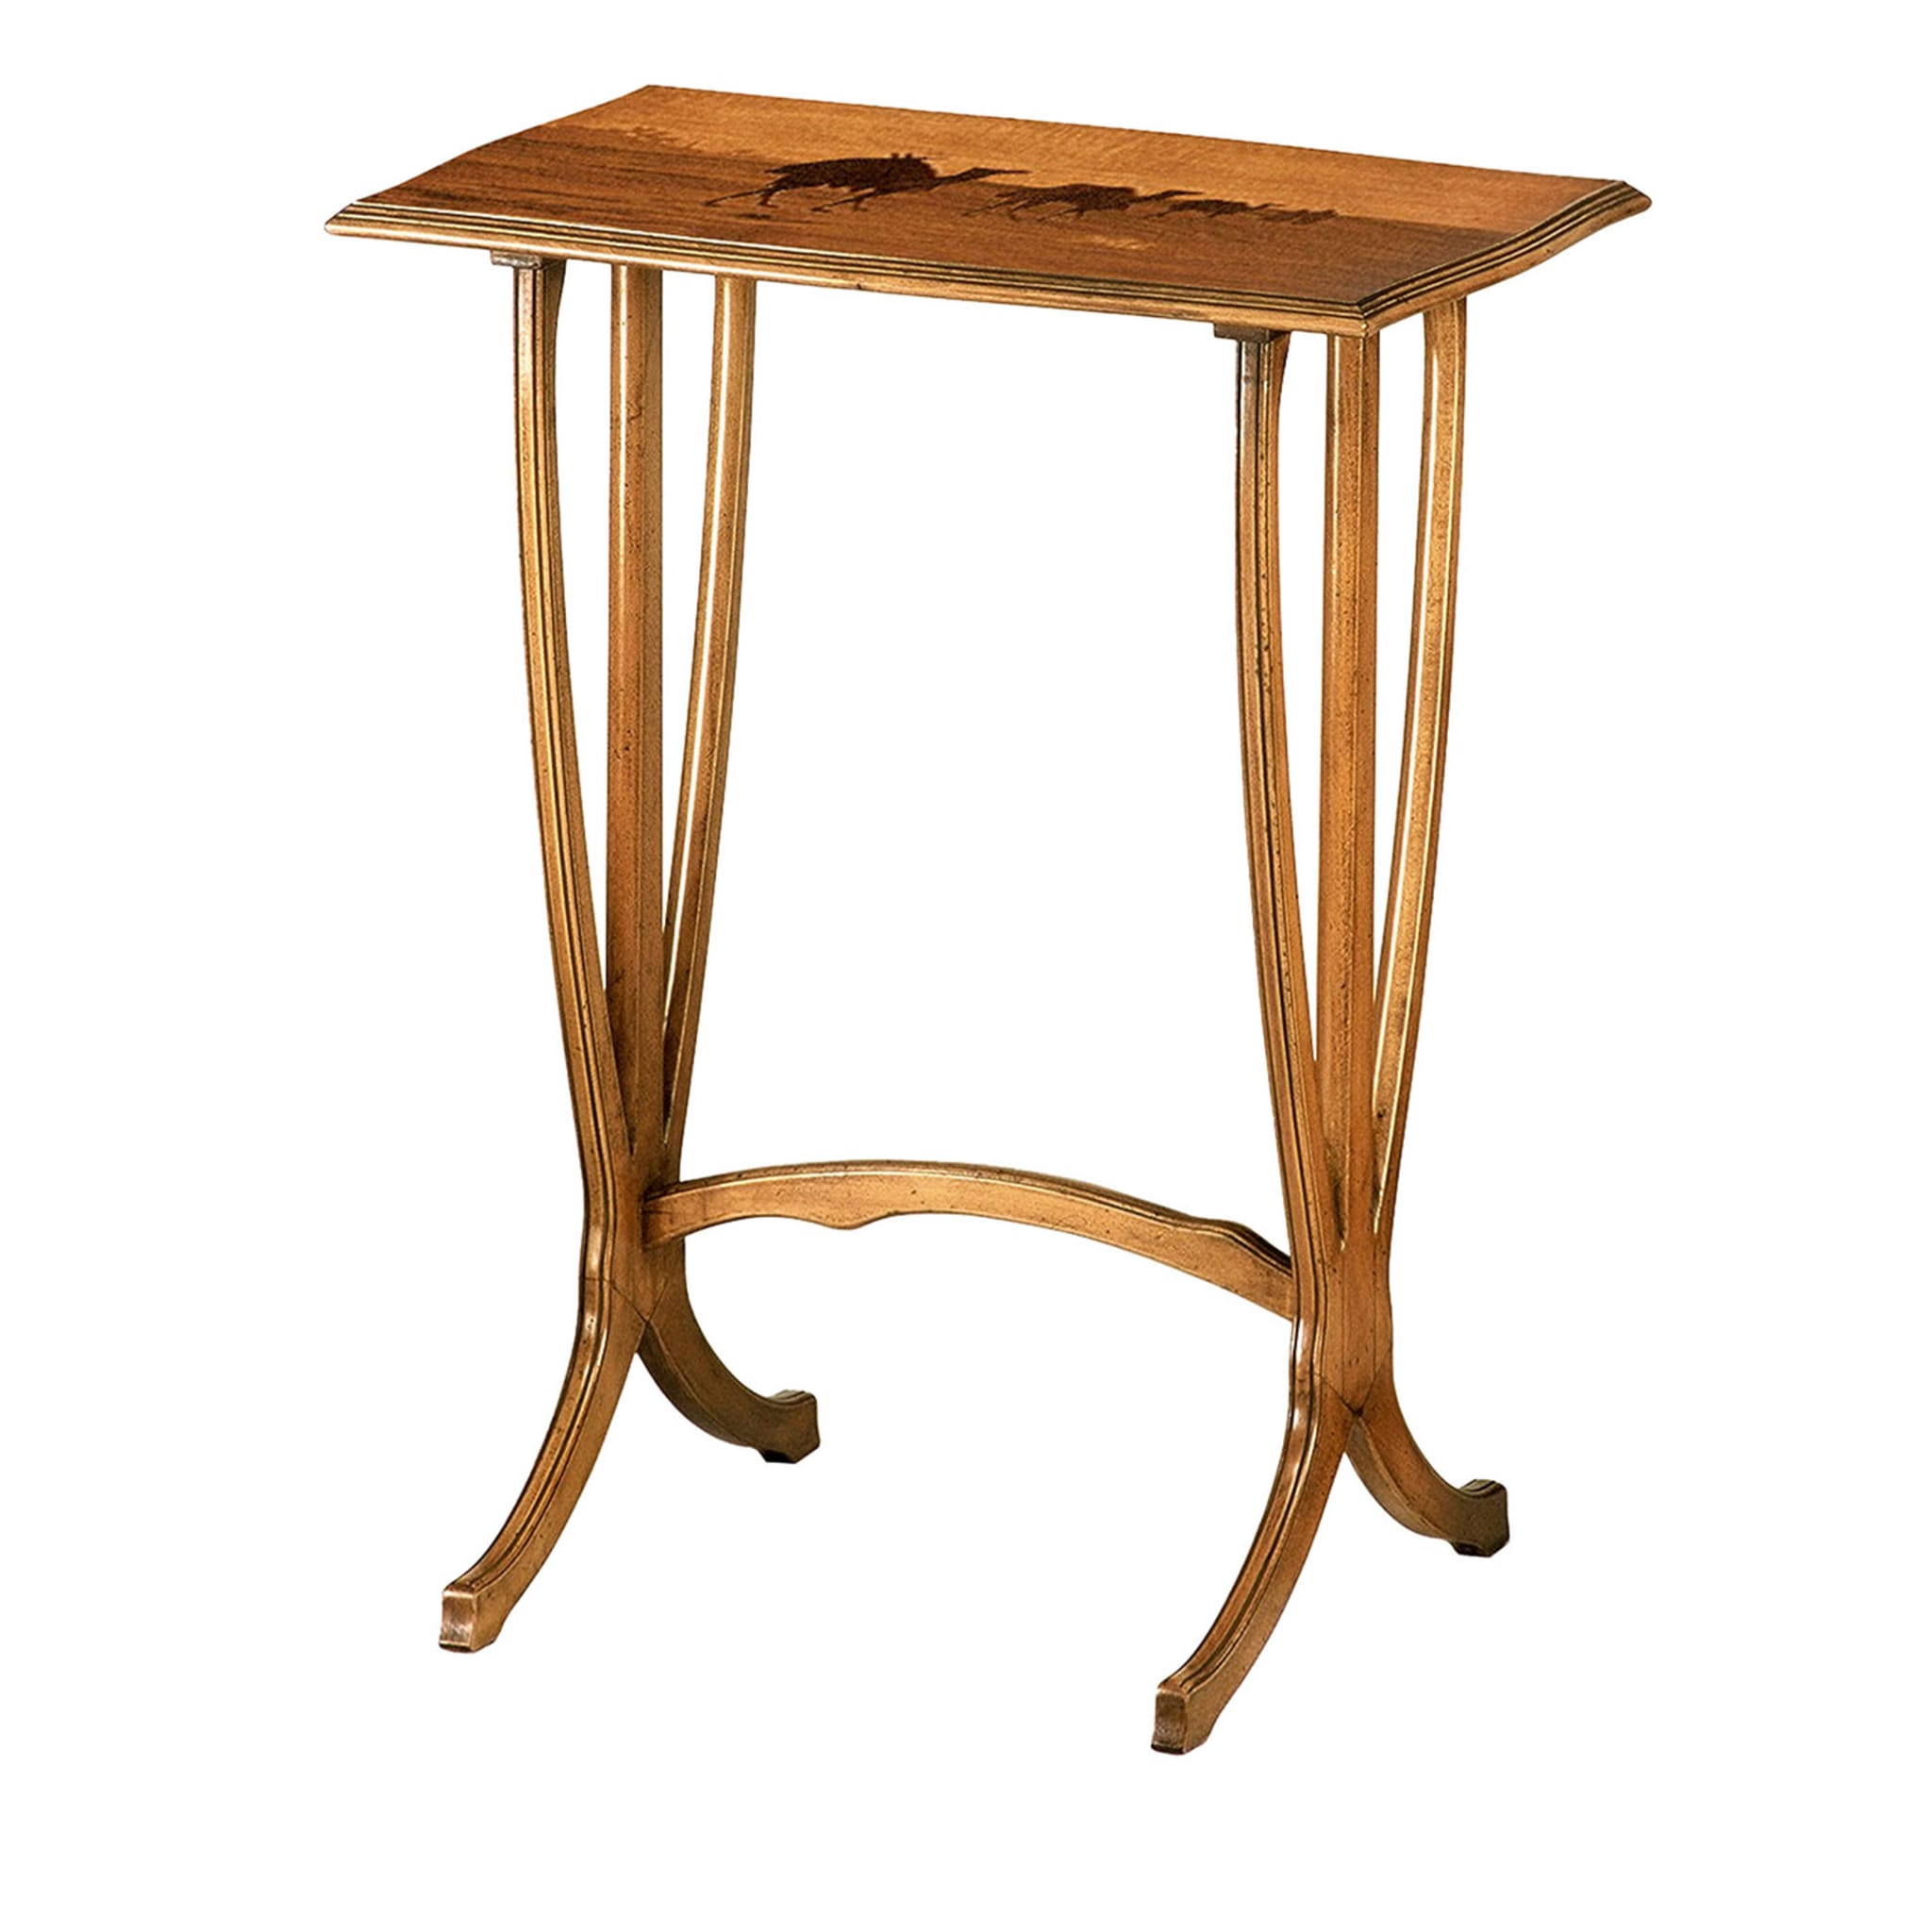 French Art Nouveau-Style Side Table by Emile Gallè #6 - Main view